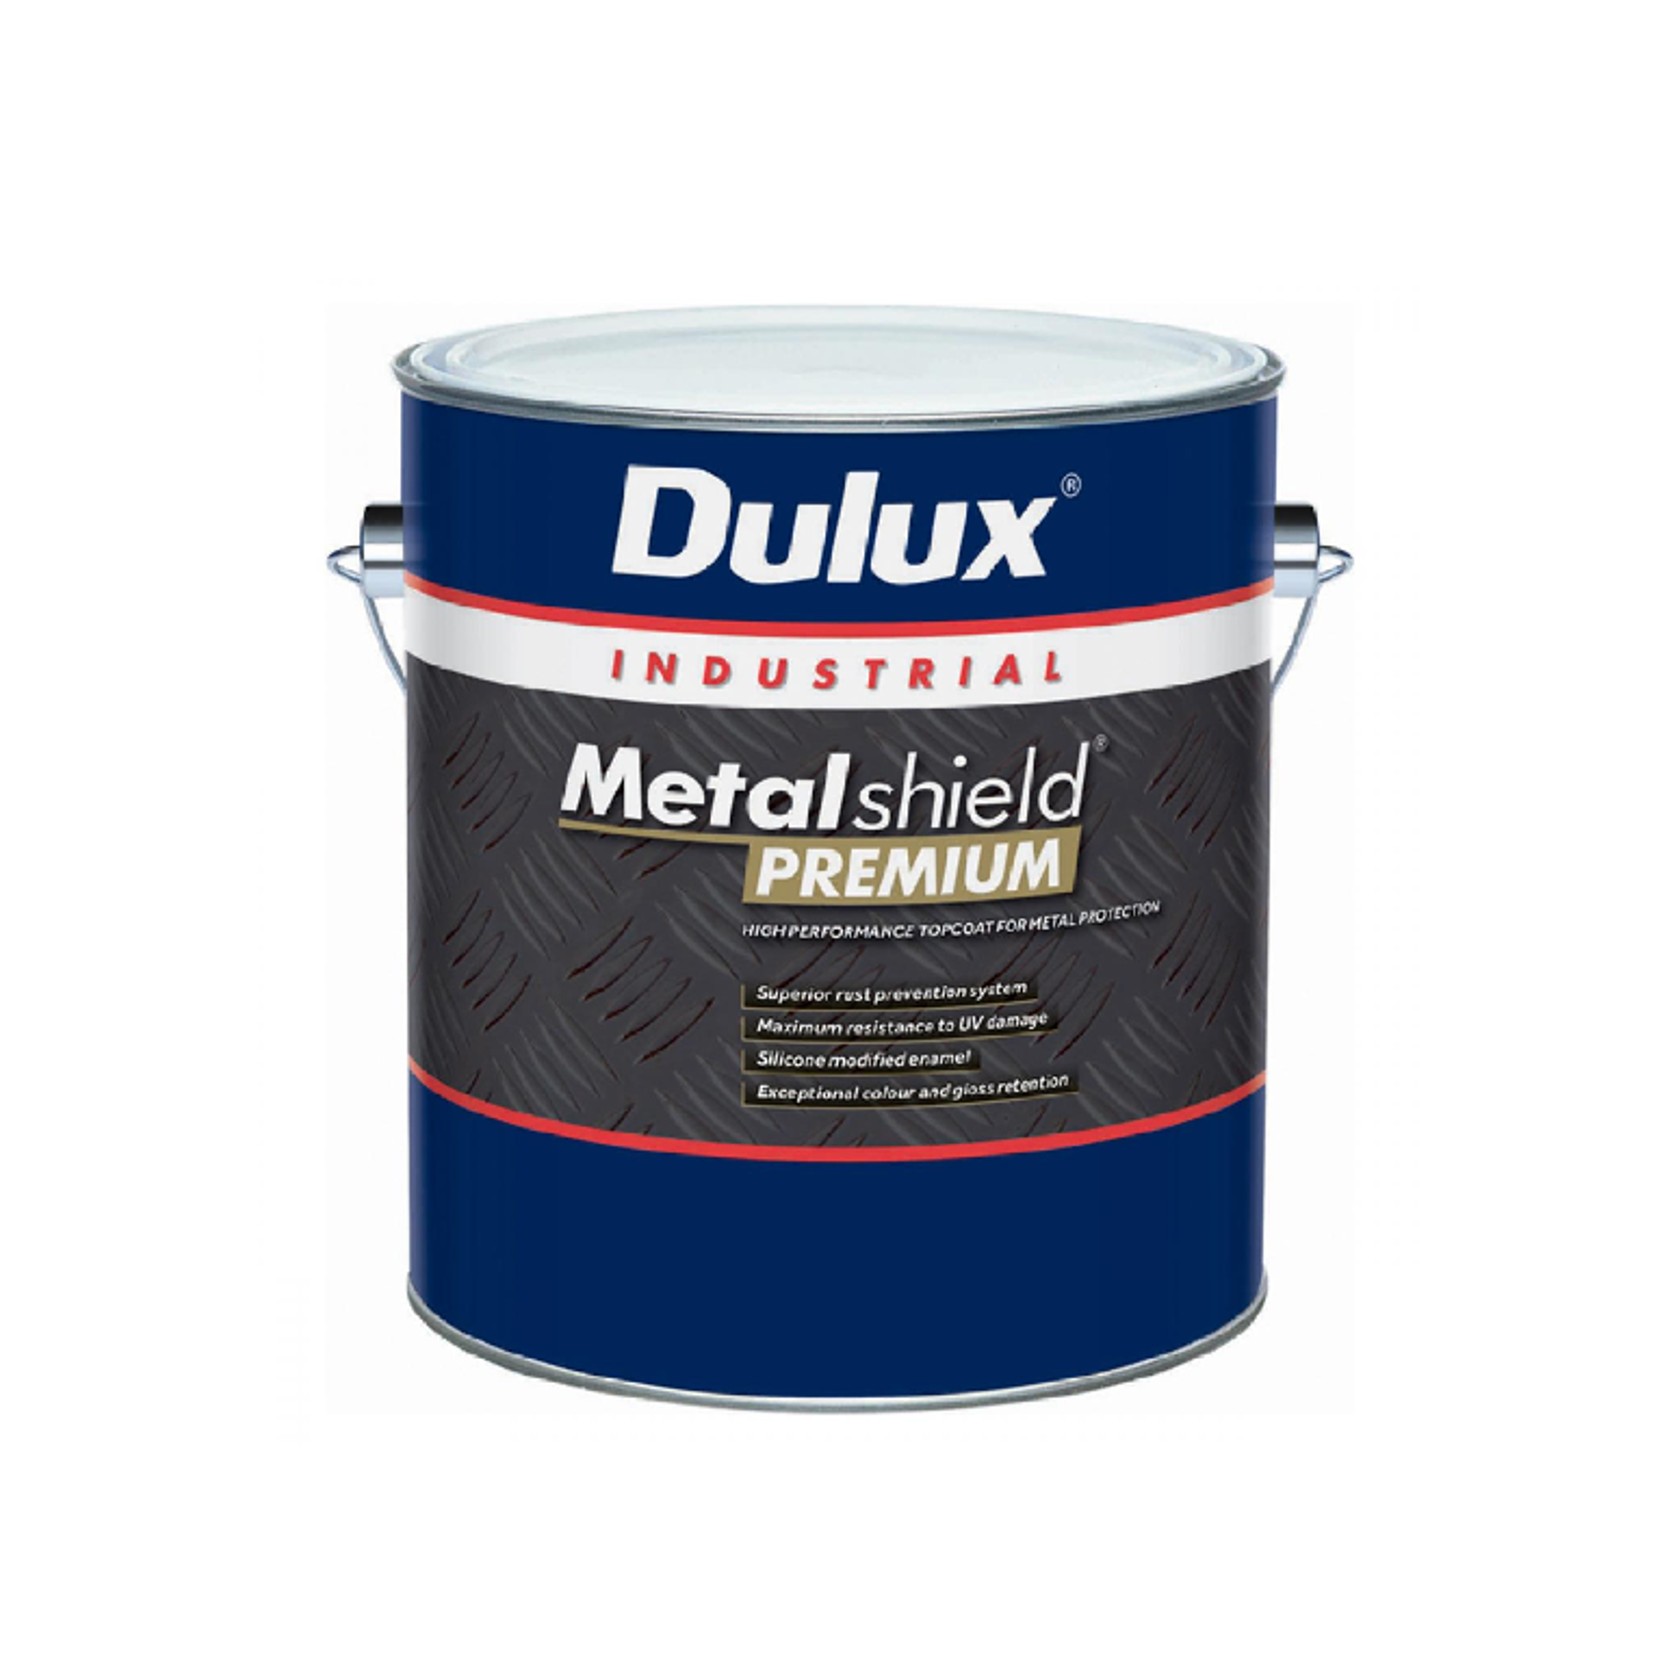 Metalshield Premium by Dulux gallery detail image